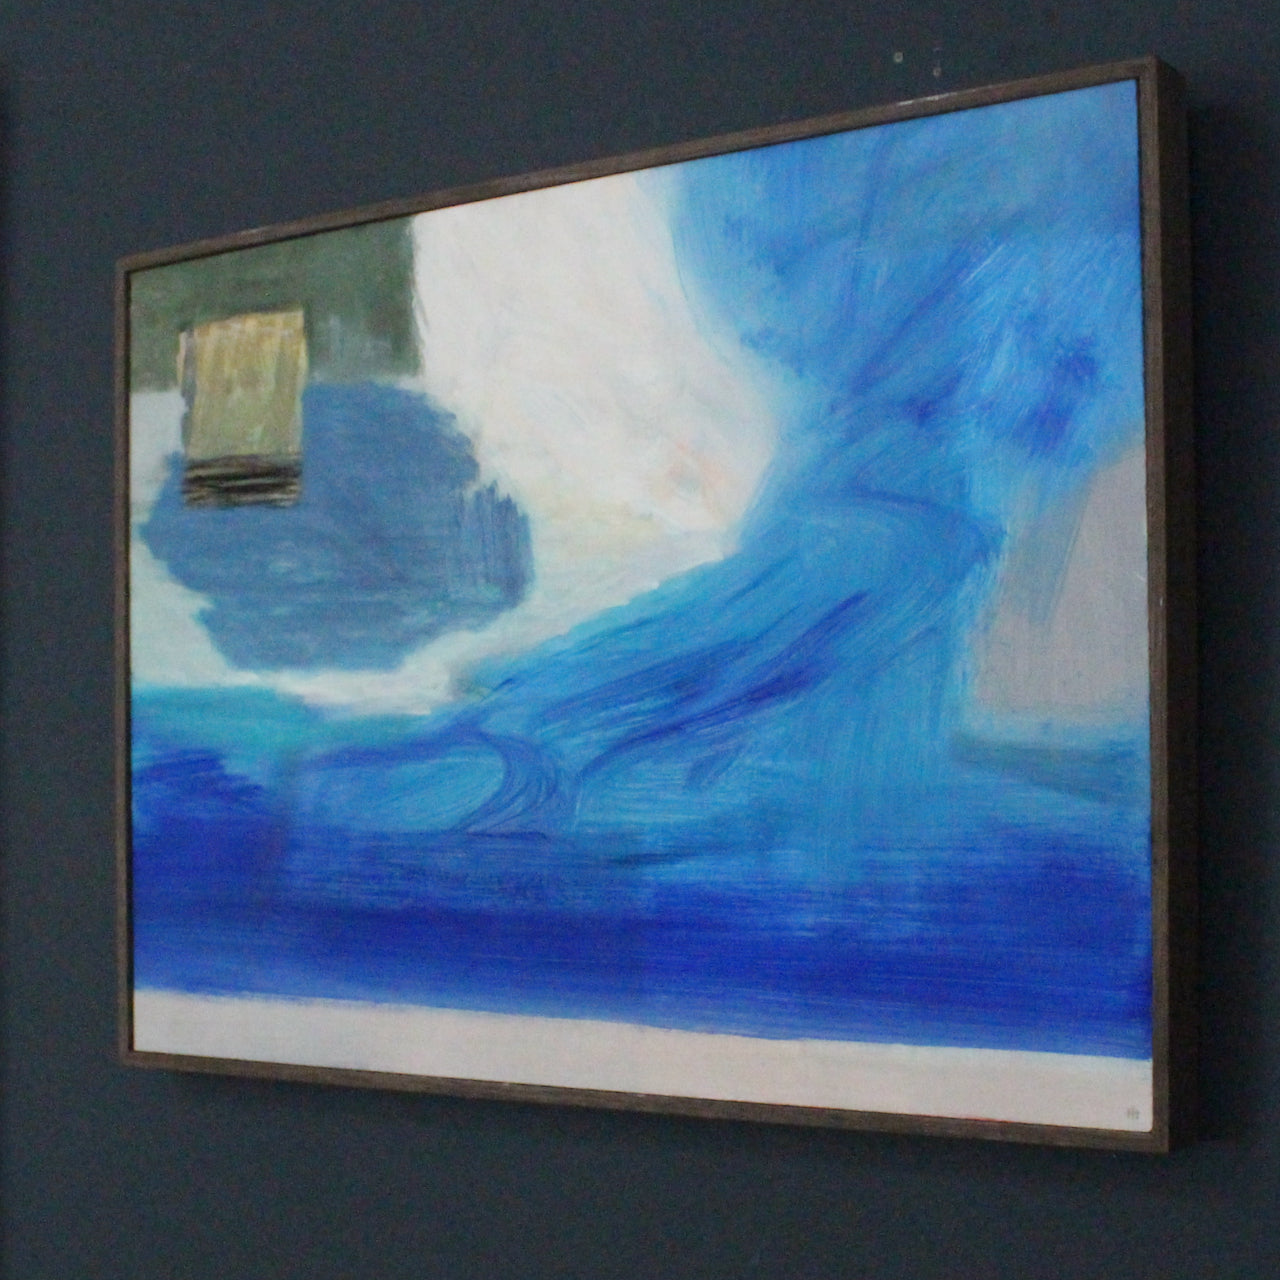 Abstract river scene in blue tones by Cornish artist Heath Hearn.